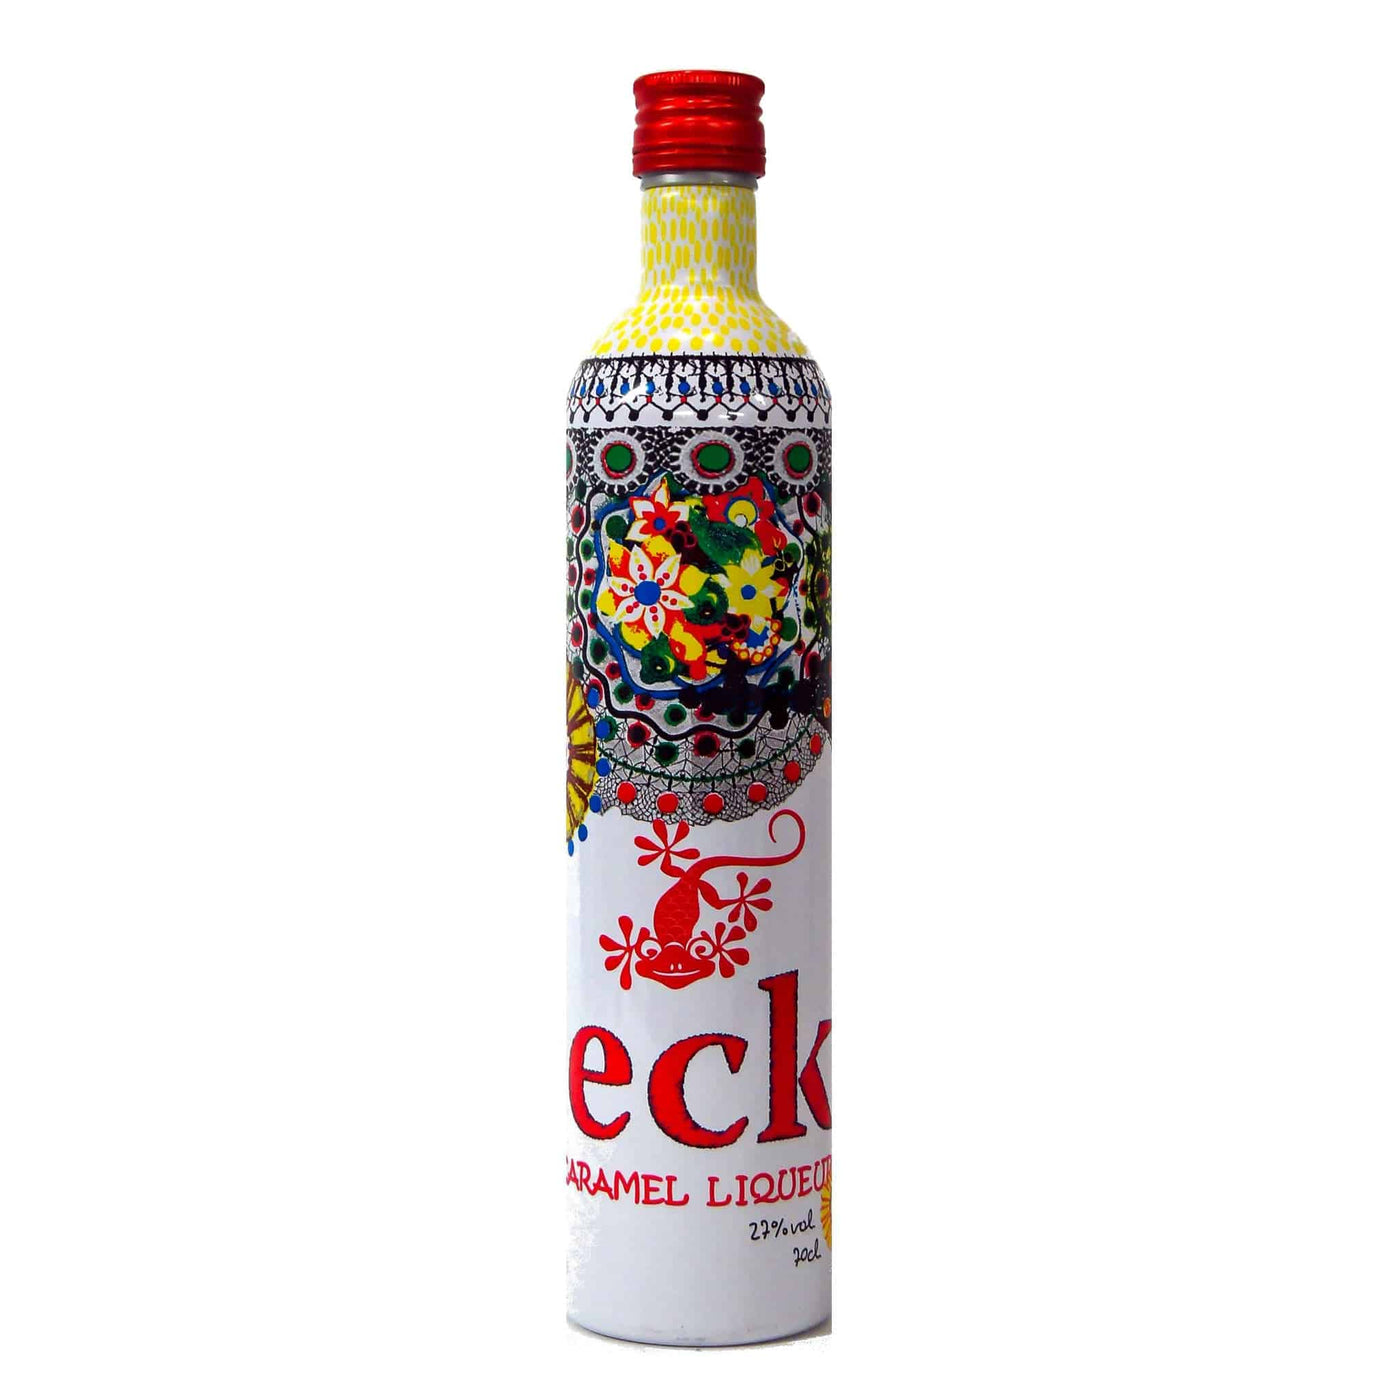 Gecko Caramel Vodka - Spiritly